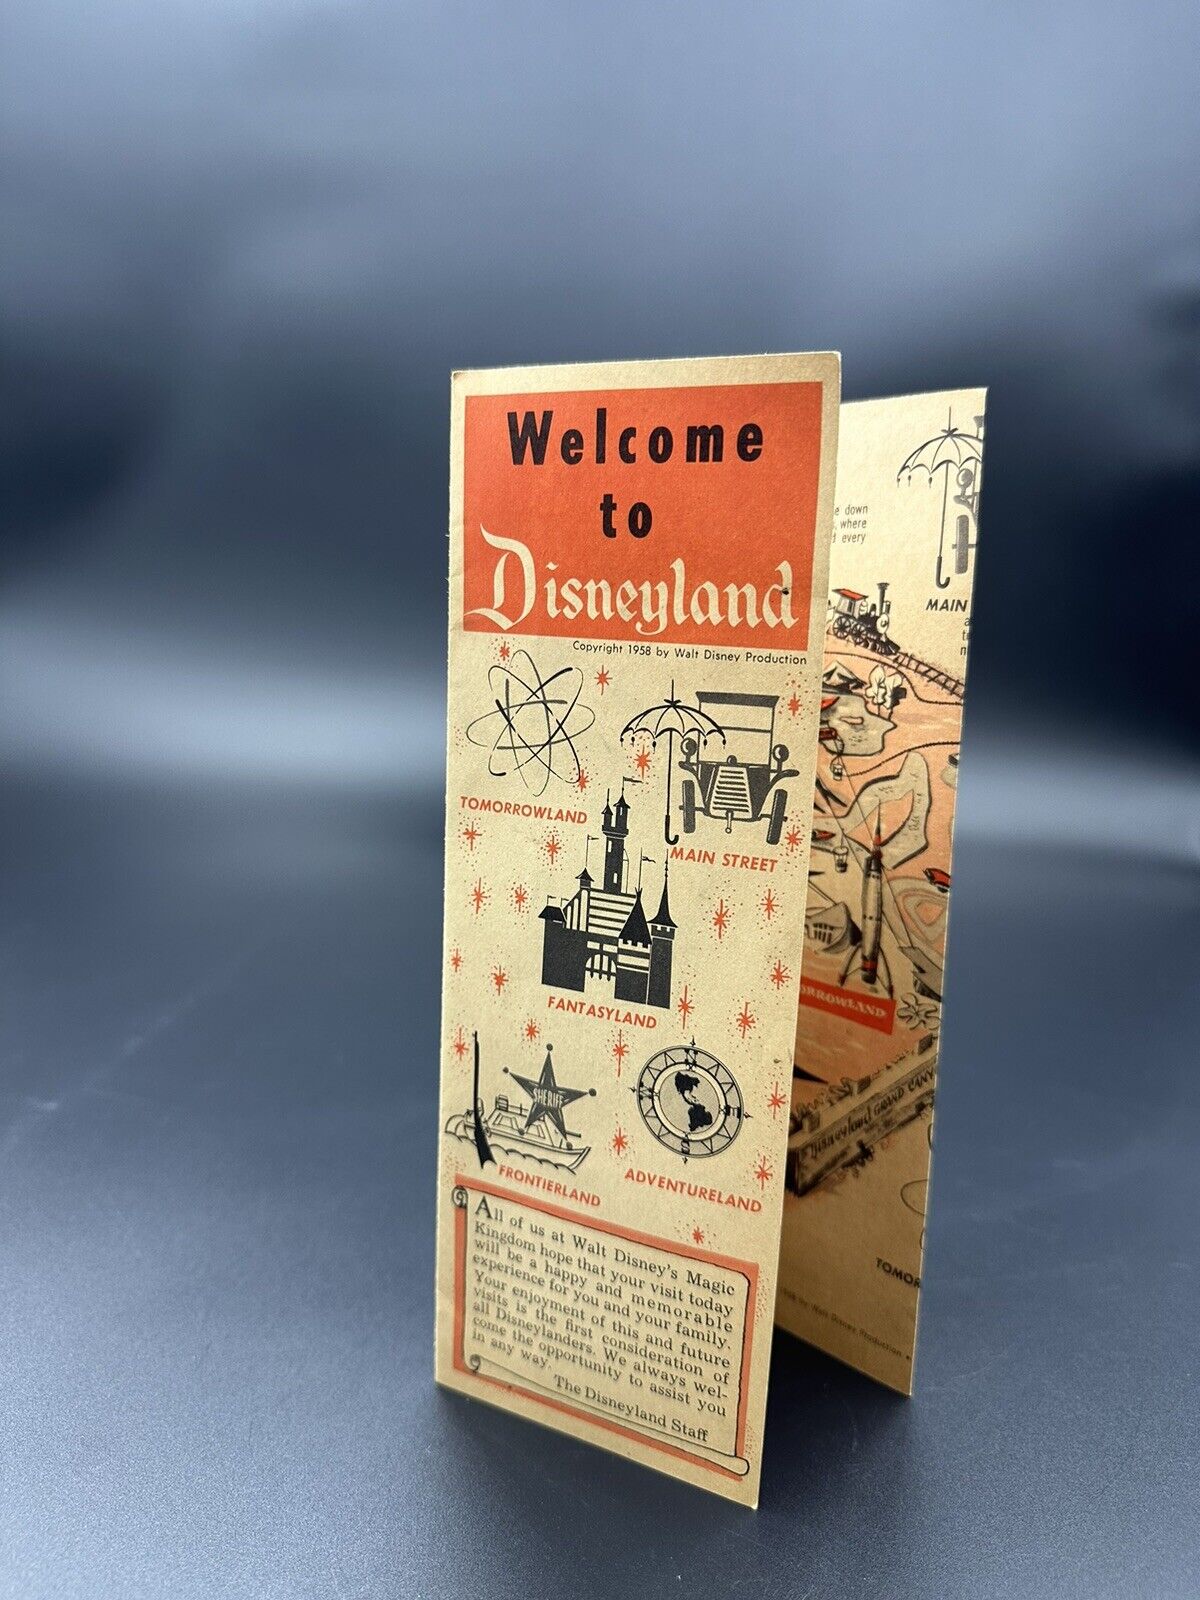 Vintage 1958 Welcome to Disneyland Brochure Map Guide Pamphlet Souvenir Original